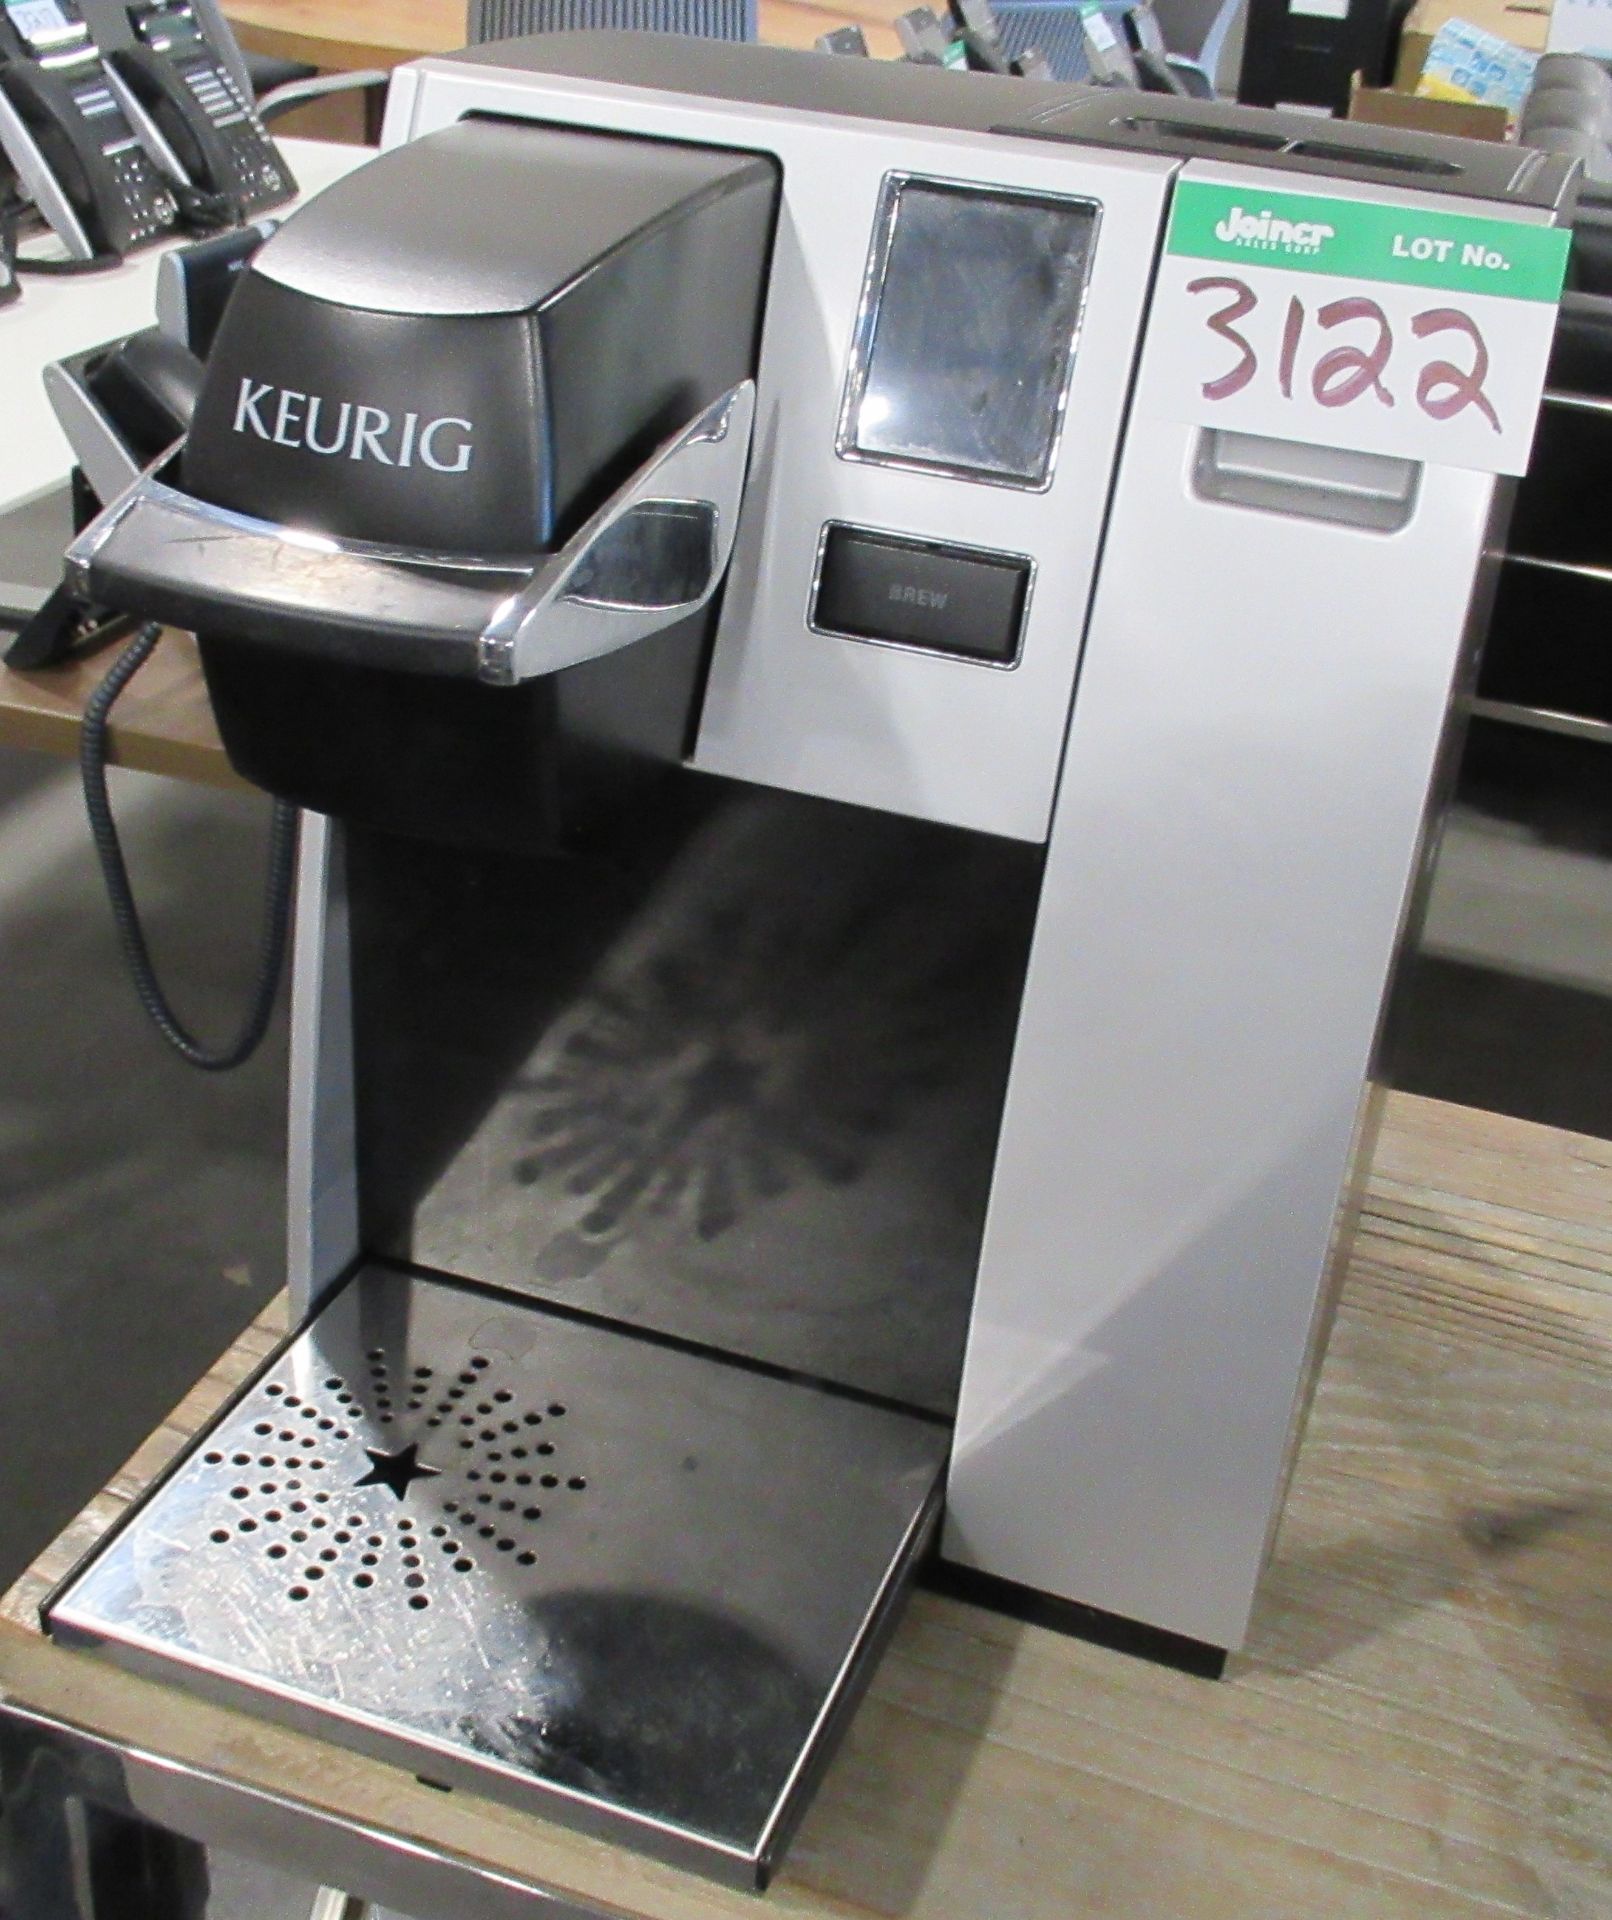 L2: KEURIG COFFEE MACHINE